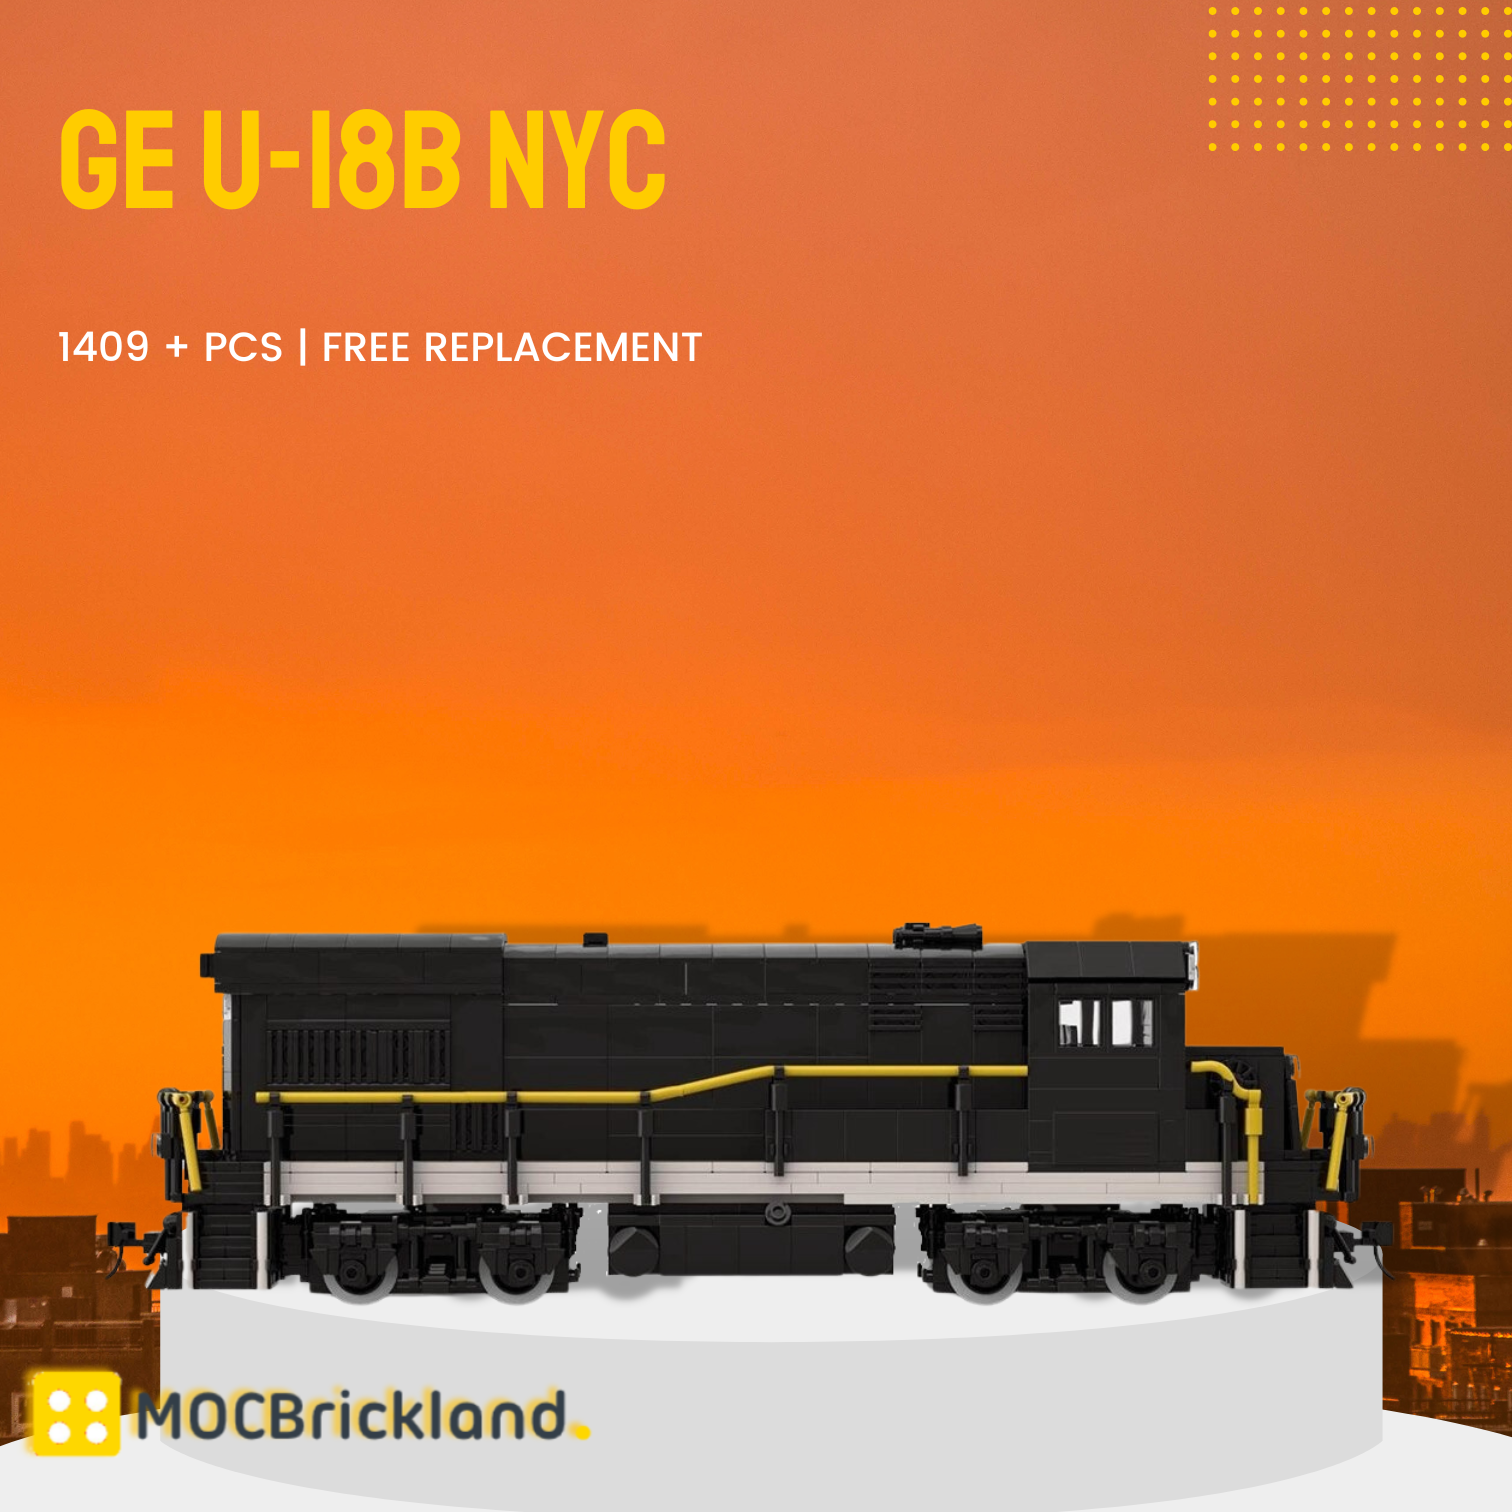 GE U-18B NYC MOC-116990 Technic With 1409 Pieces